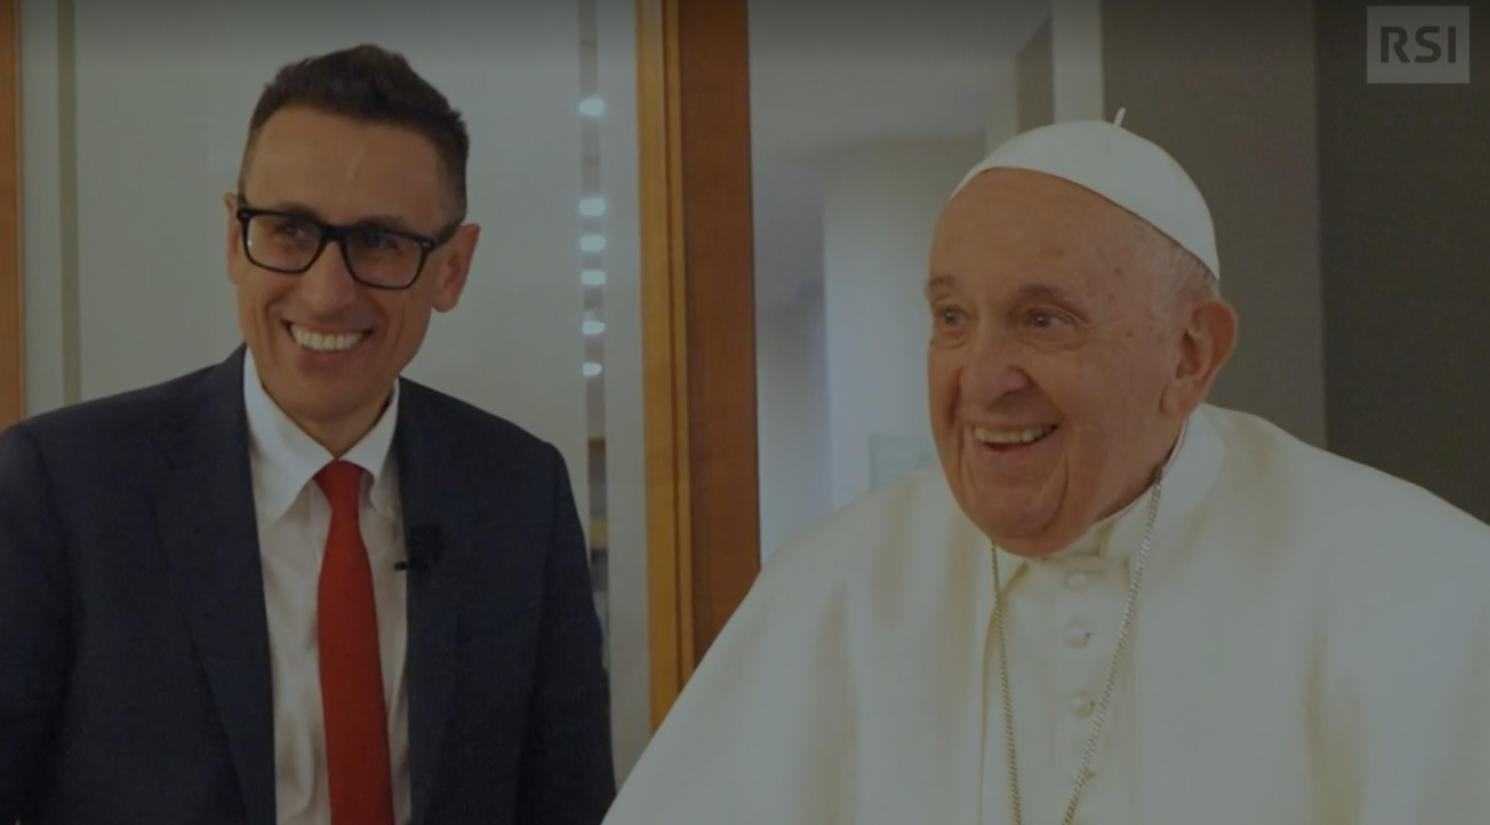 Paolo Rodari interviews the Pope